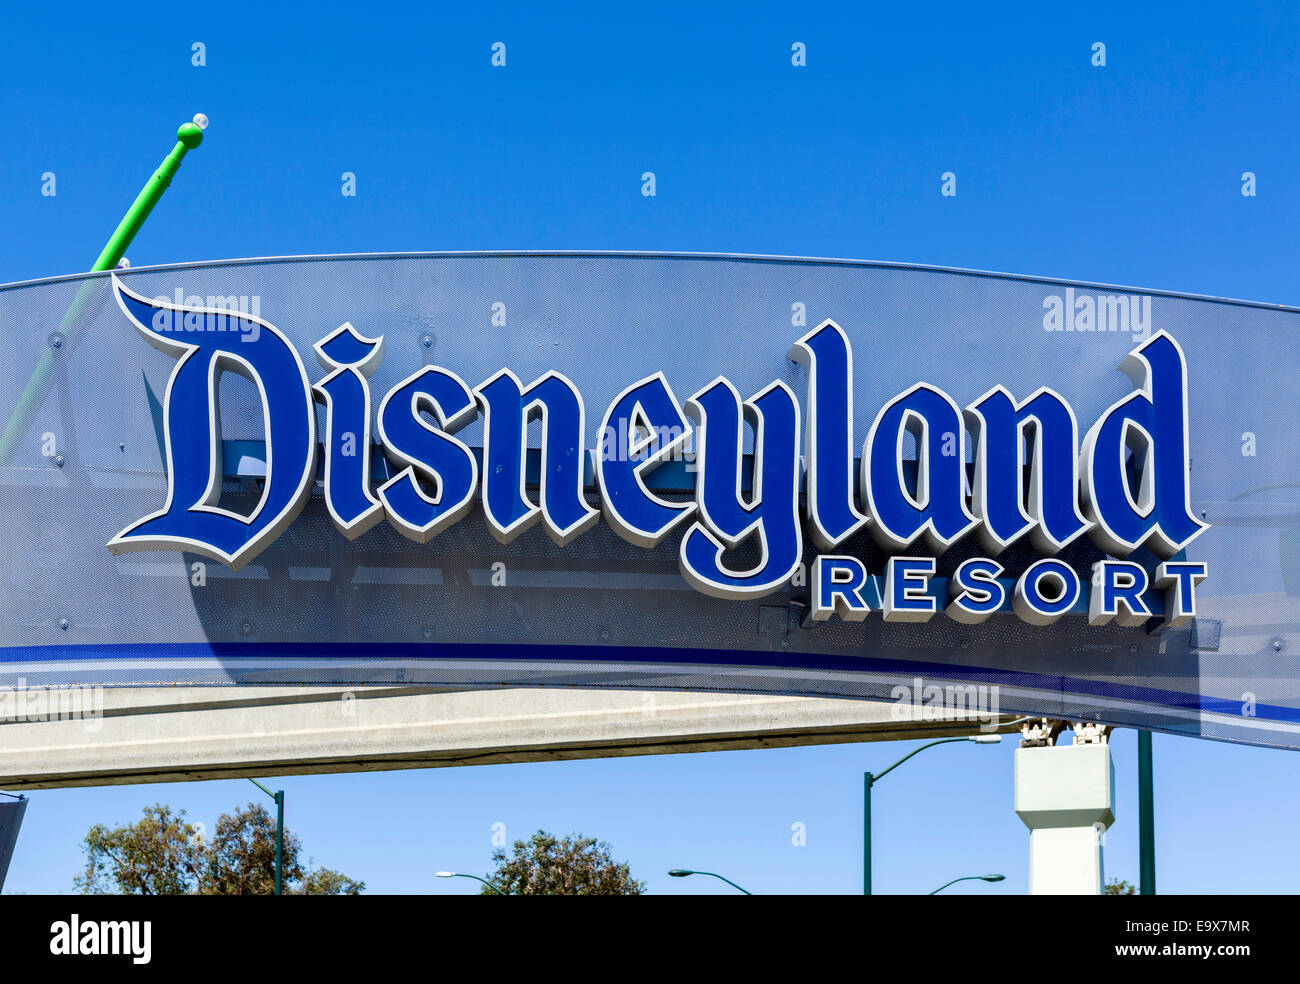 Ingresso al Disneyland Resort Anaheim, Orange County, nei pressi di Los Angeles, California, Stati Uniti d'America Foto Stock